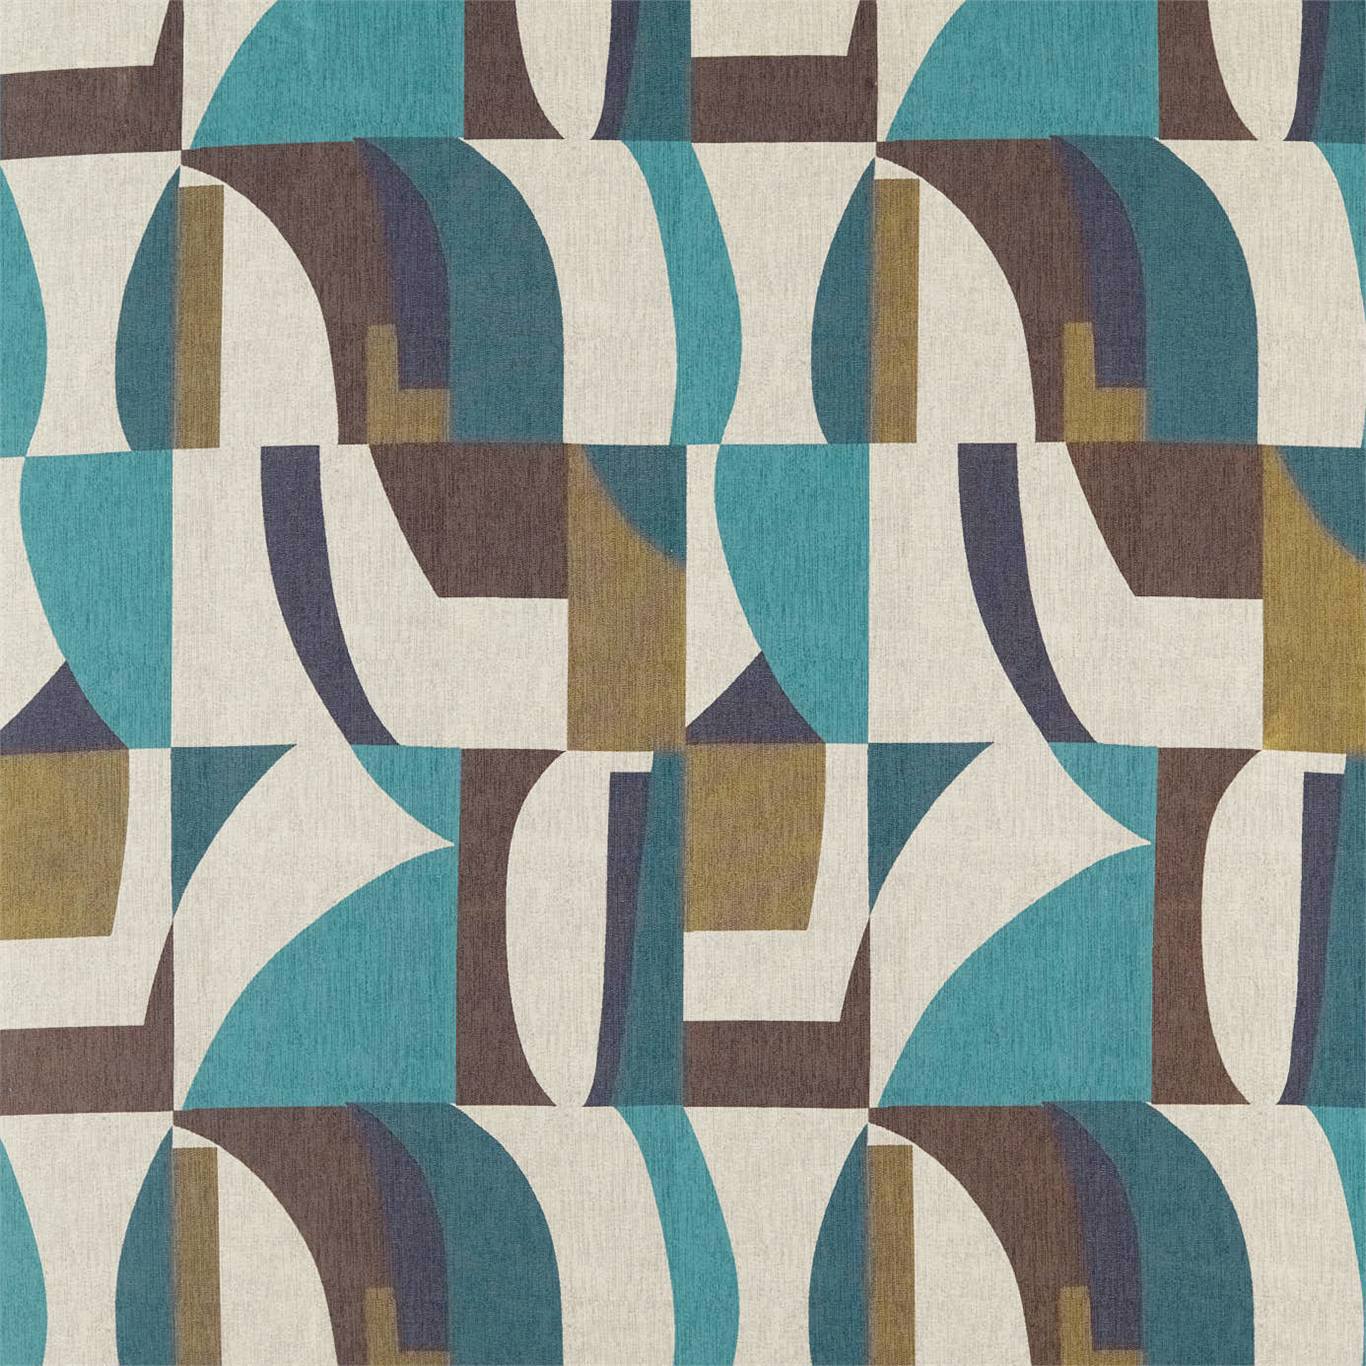 Bodega Fabric by Harlequin - HATL132869 - Ink/Marine/Ochre